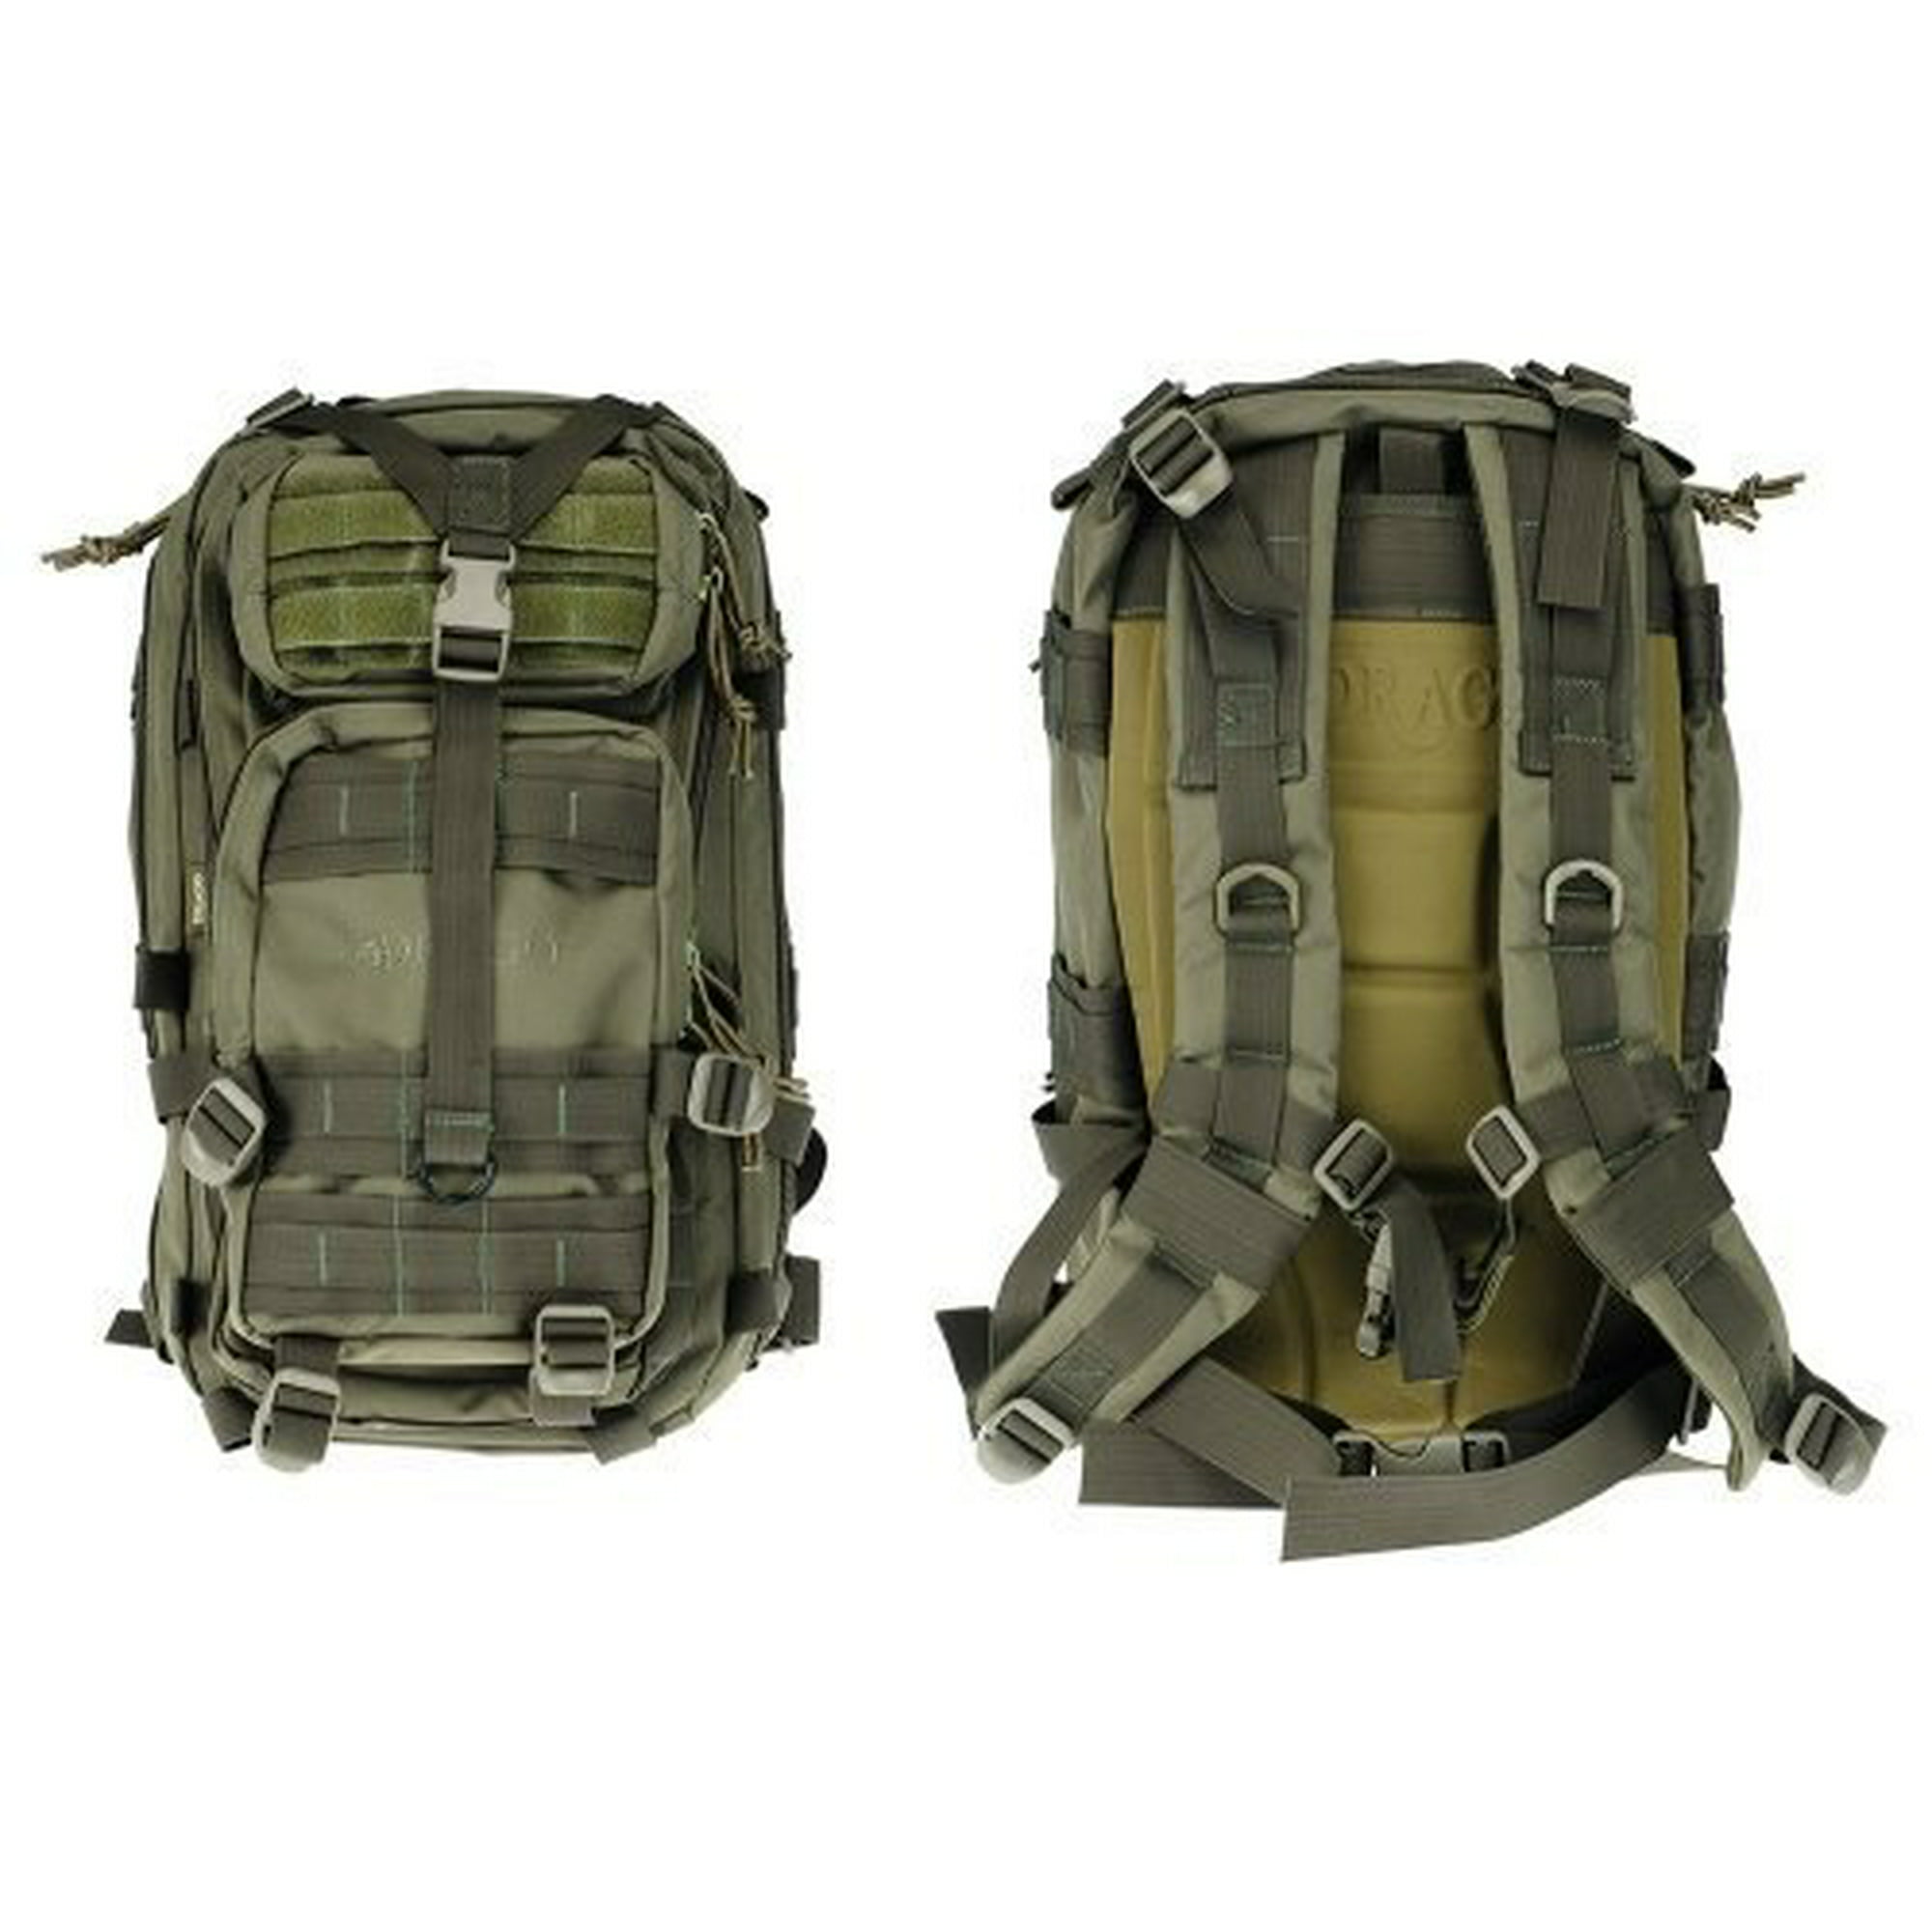 Drago gear Tracker Backpack - green | Walmart Canada